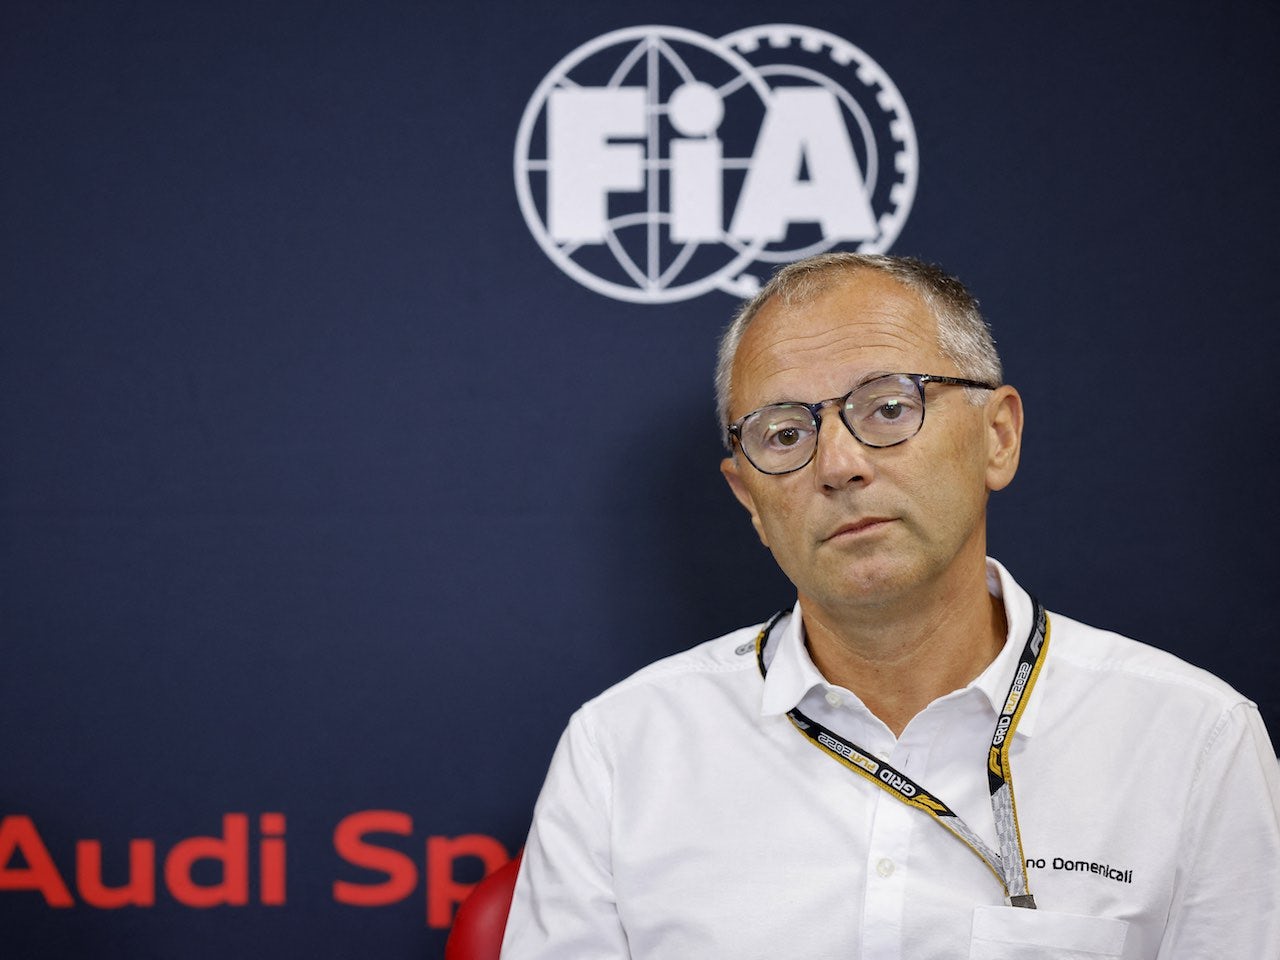 Belgian GP admits 'complicated' 2023 talks